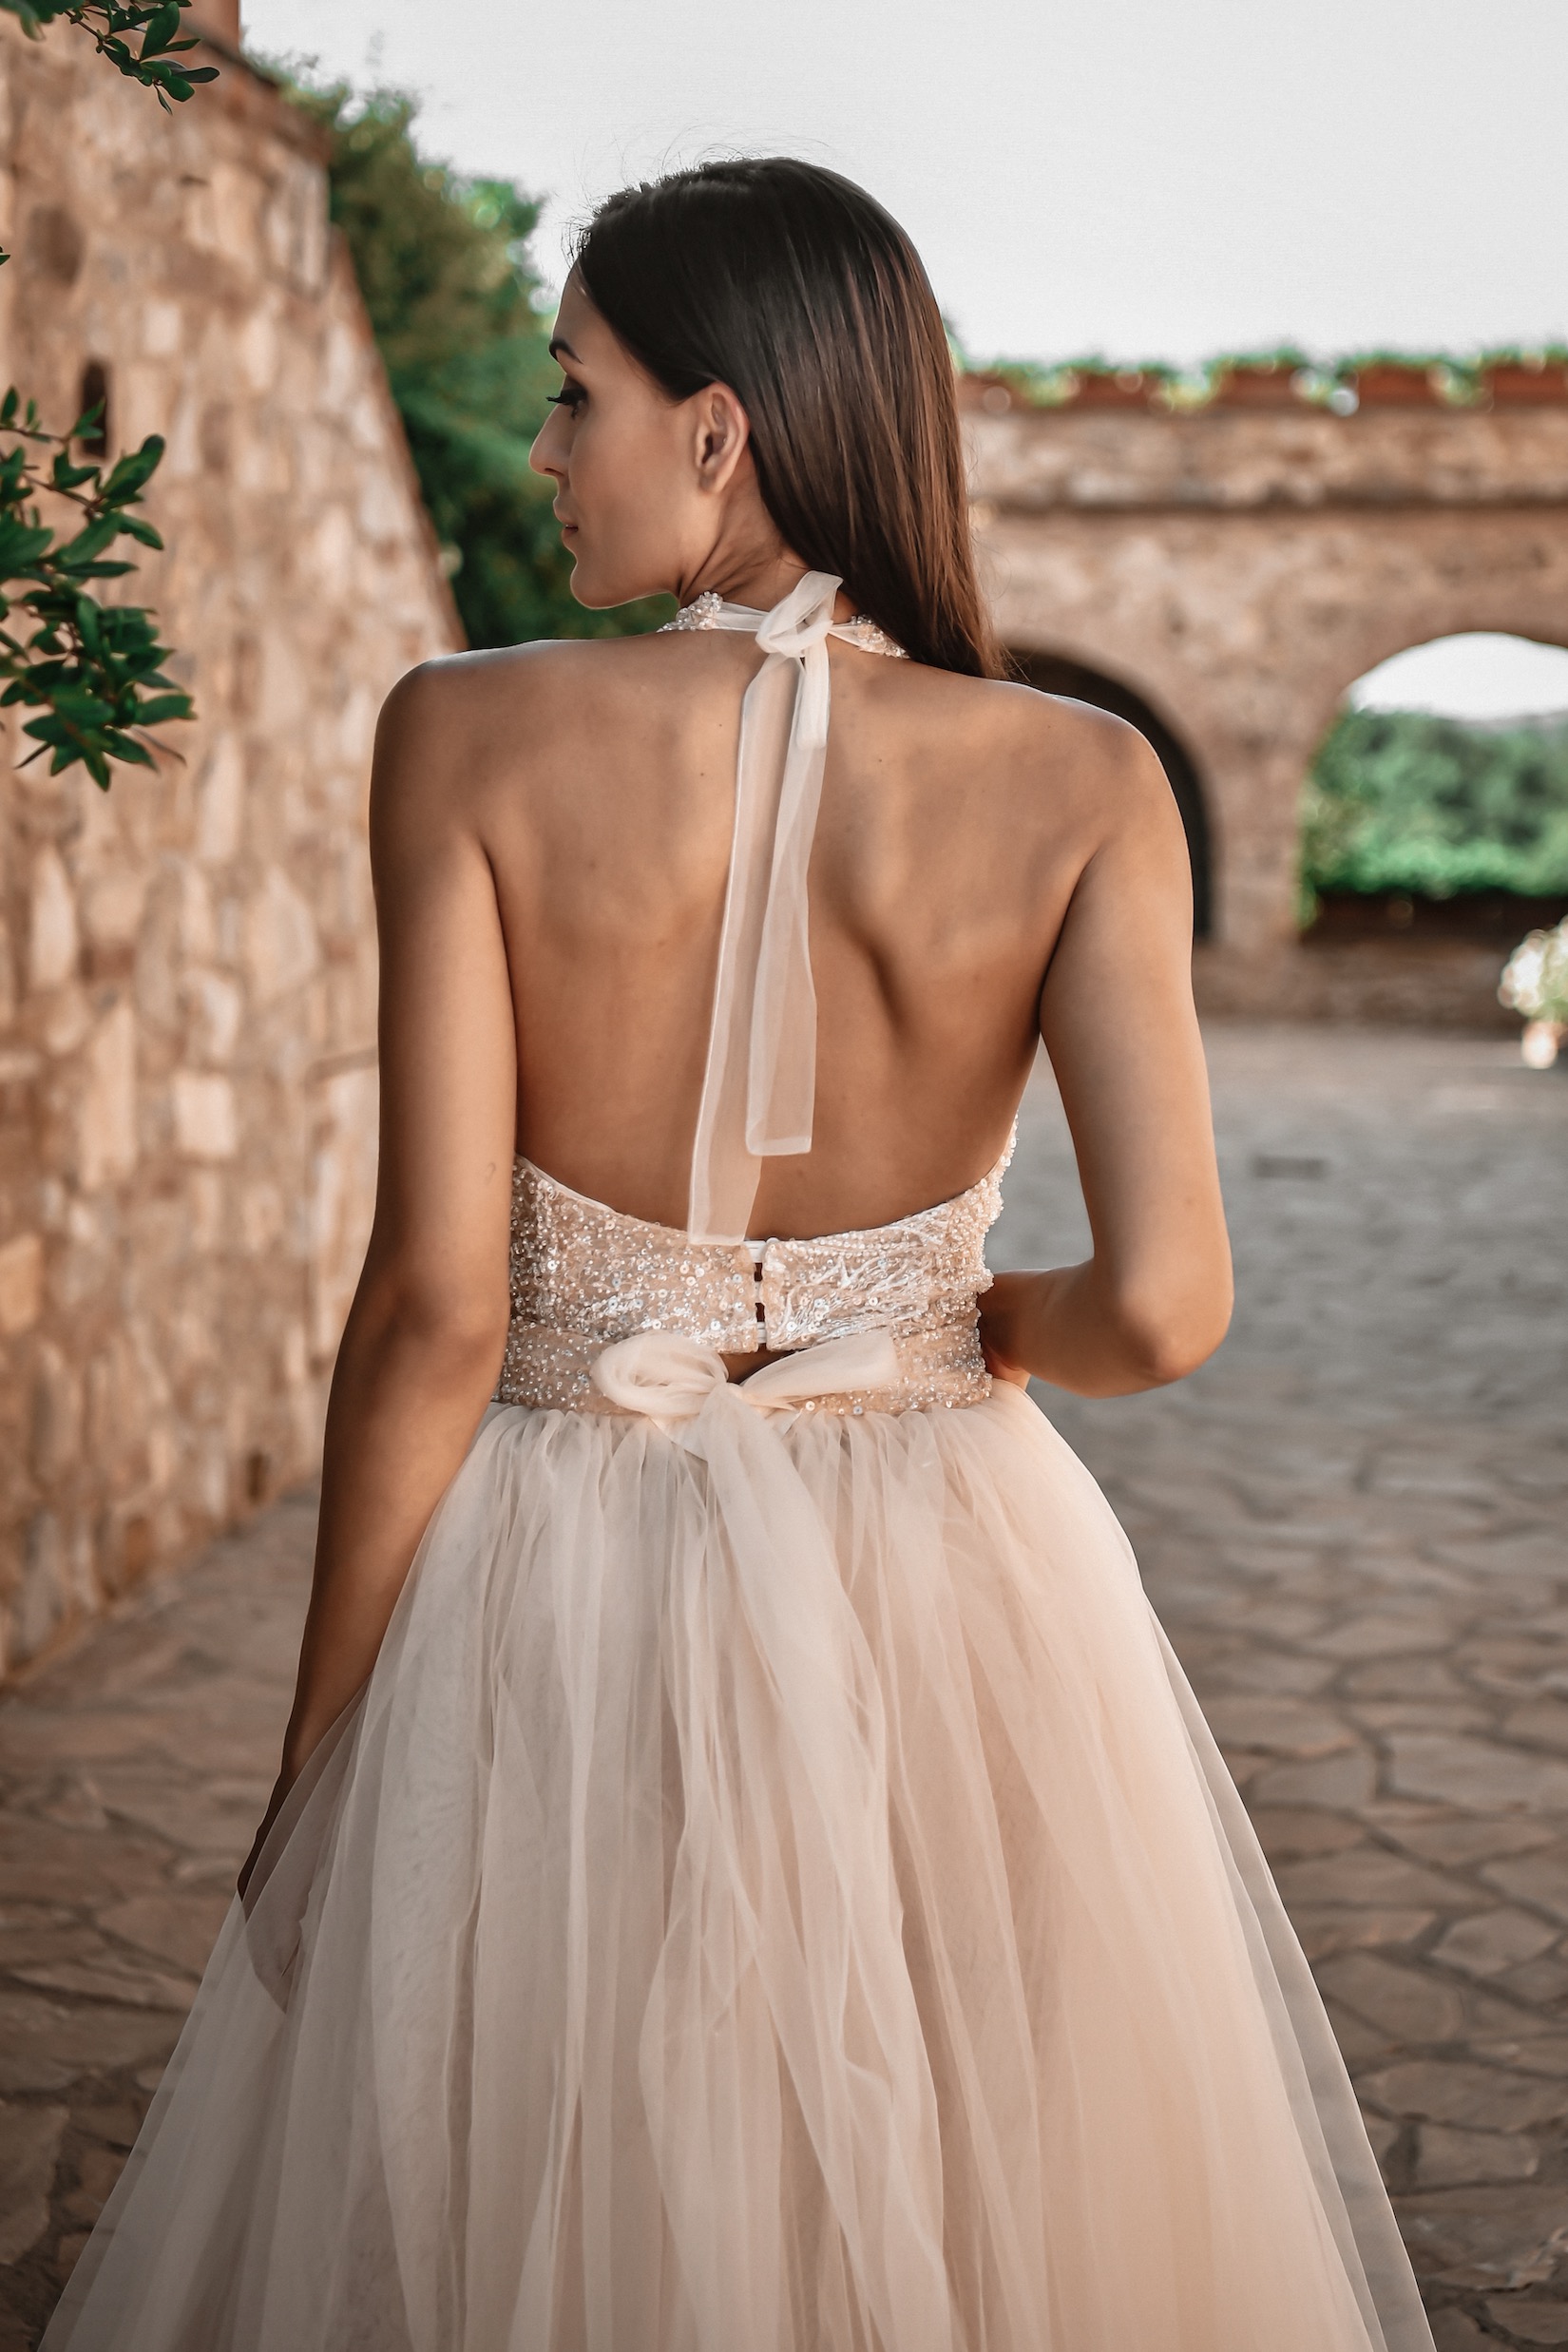 ORSOYA Bridal Dress: Halter neck bridal dress with tulle skirt.